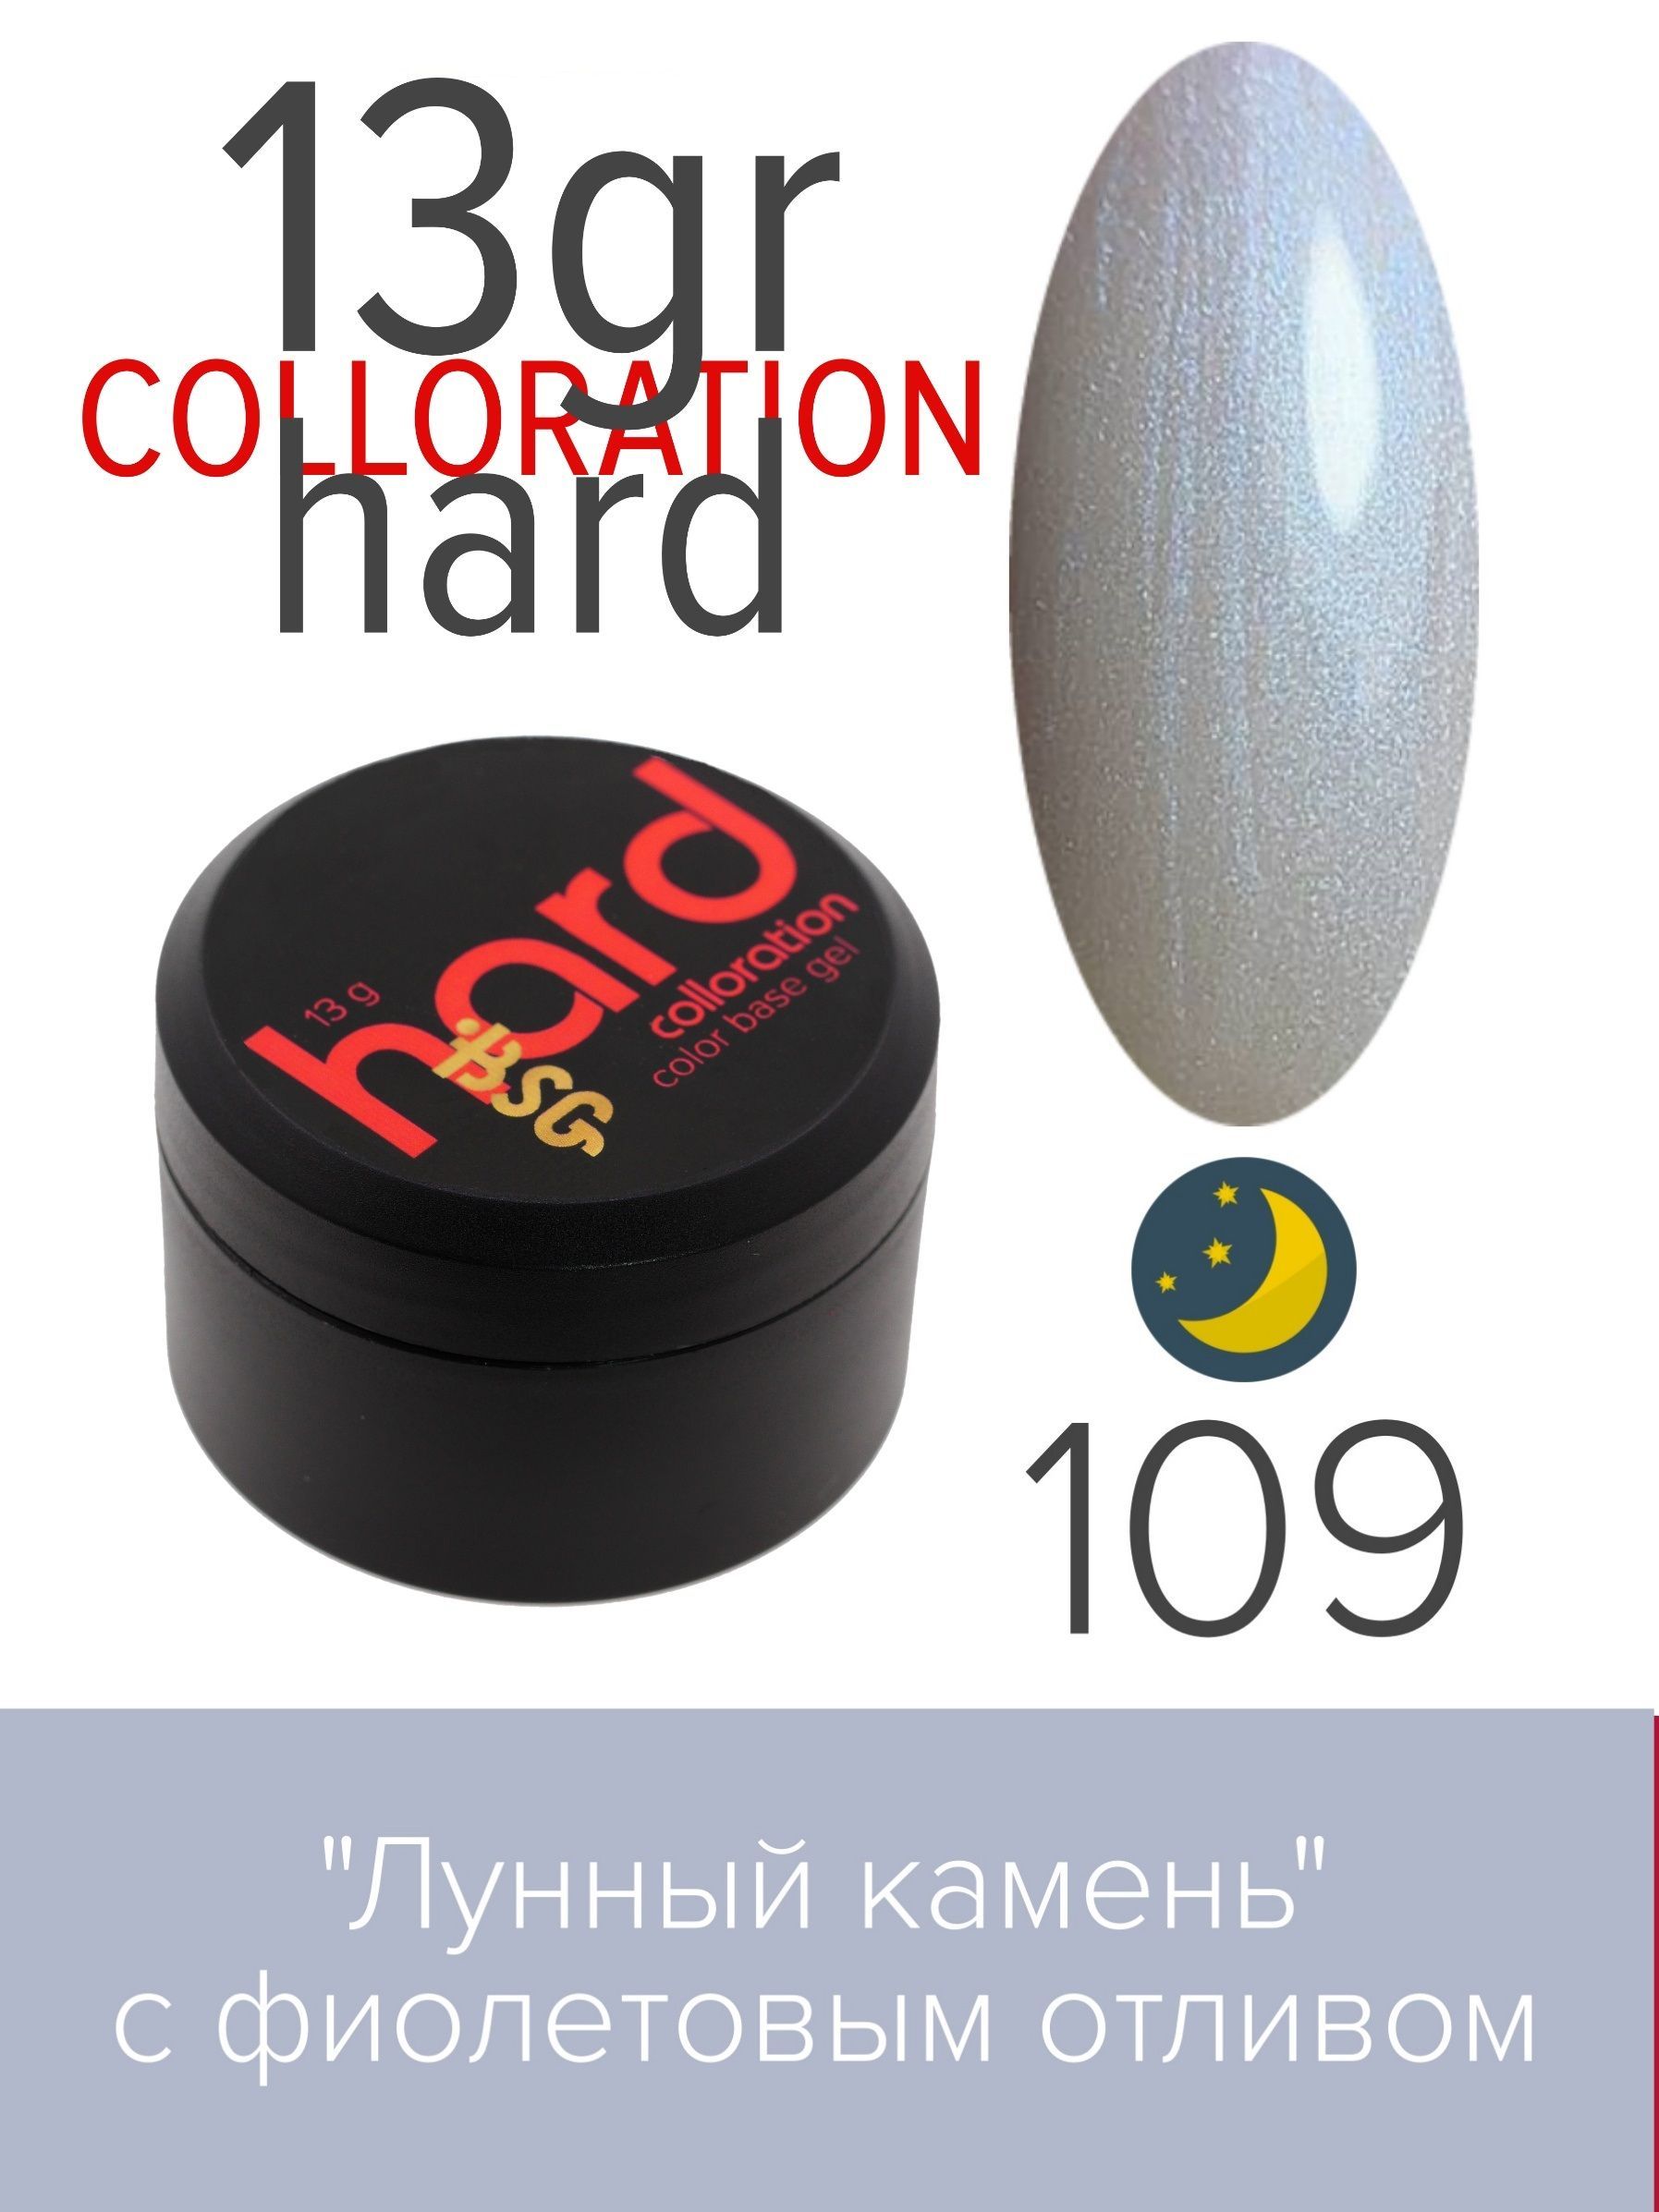 База BSG Colloration Hard цветная жесткая №109 комплект ных жестких баз bsg colloration hard лунный камень